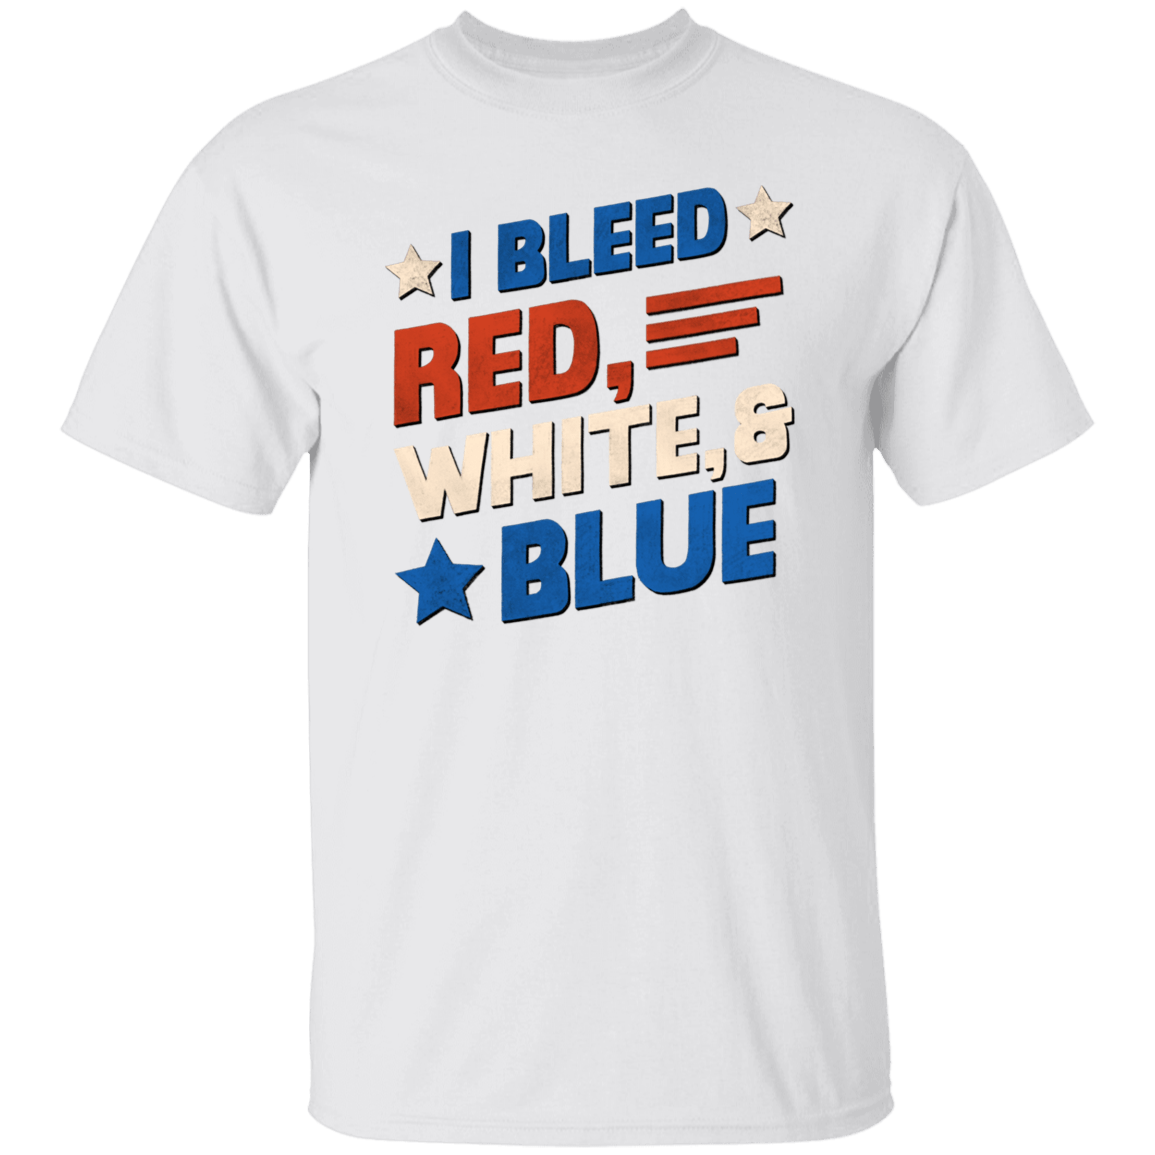 I Bleed Red, White & Blue T-Shirt